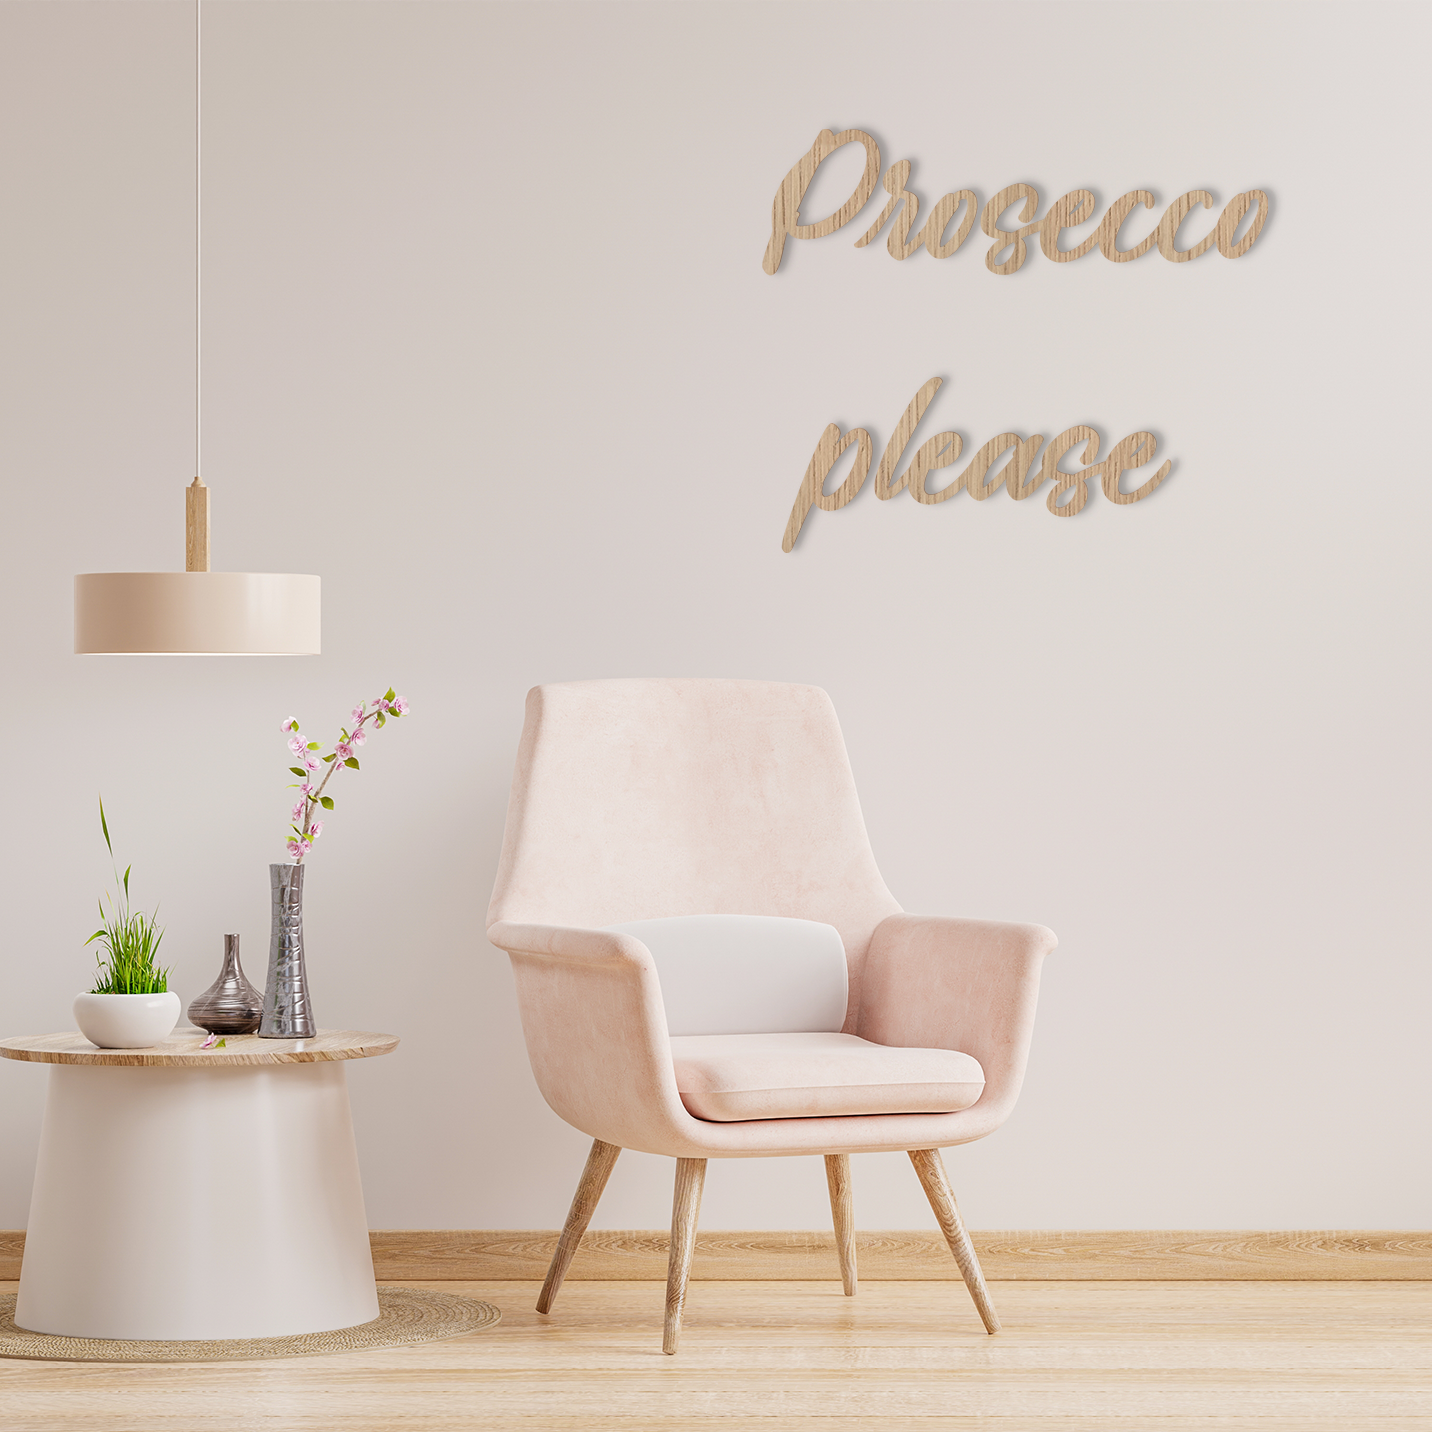 Prosecco Please Wall Art - Slate & Rose